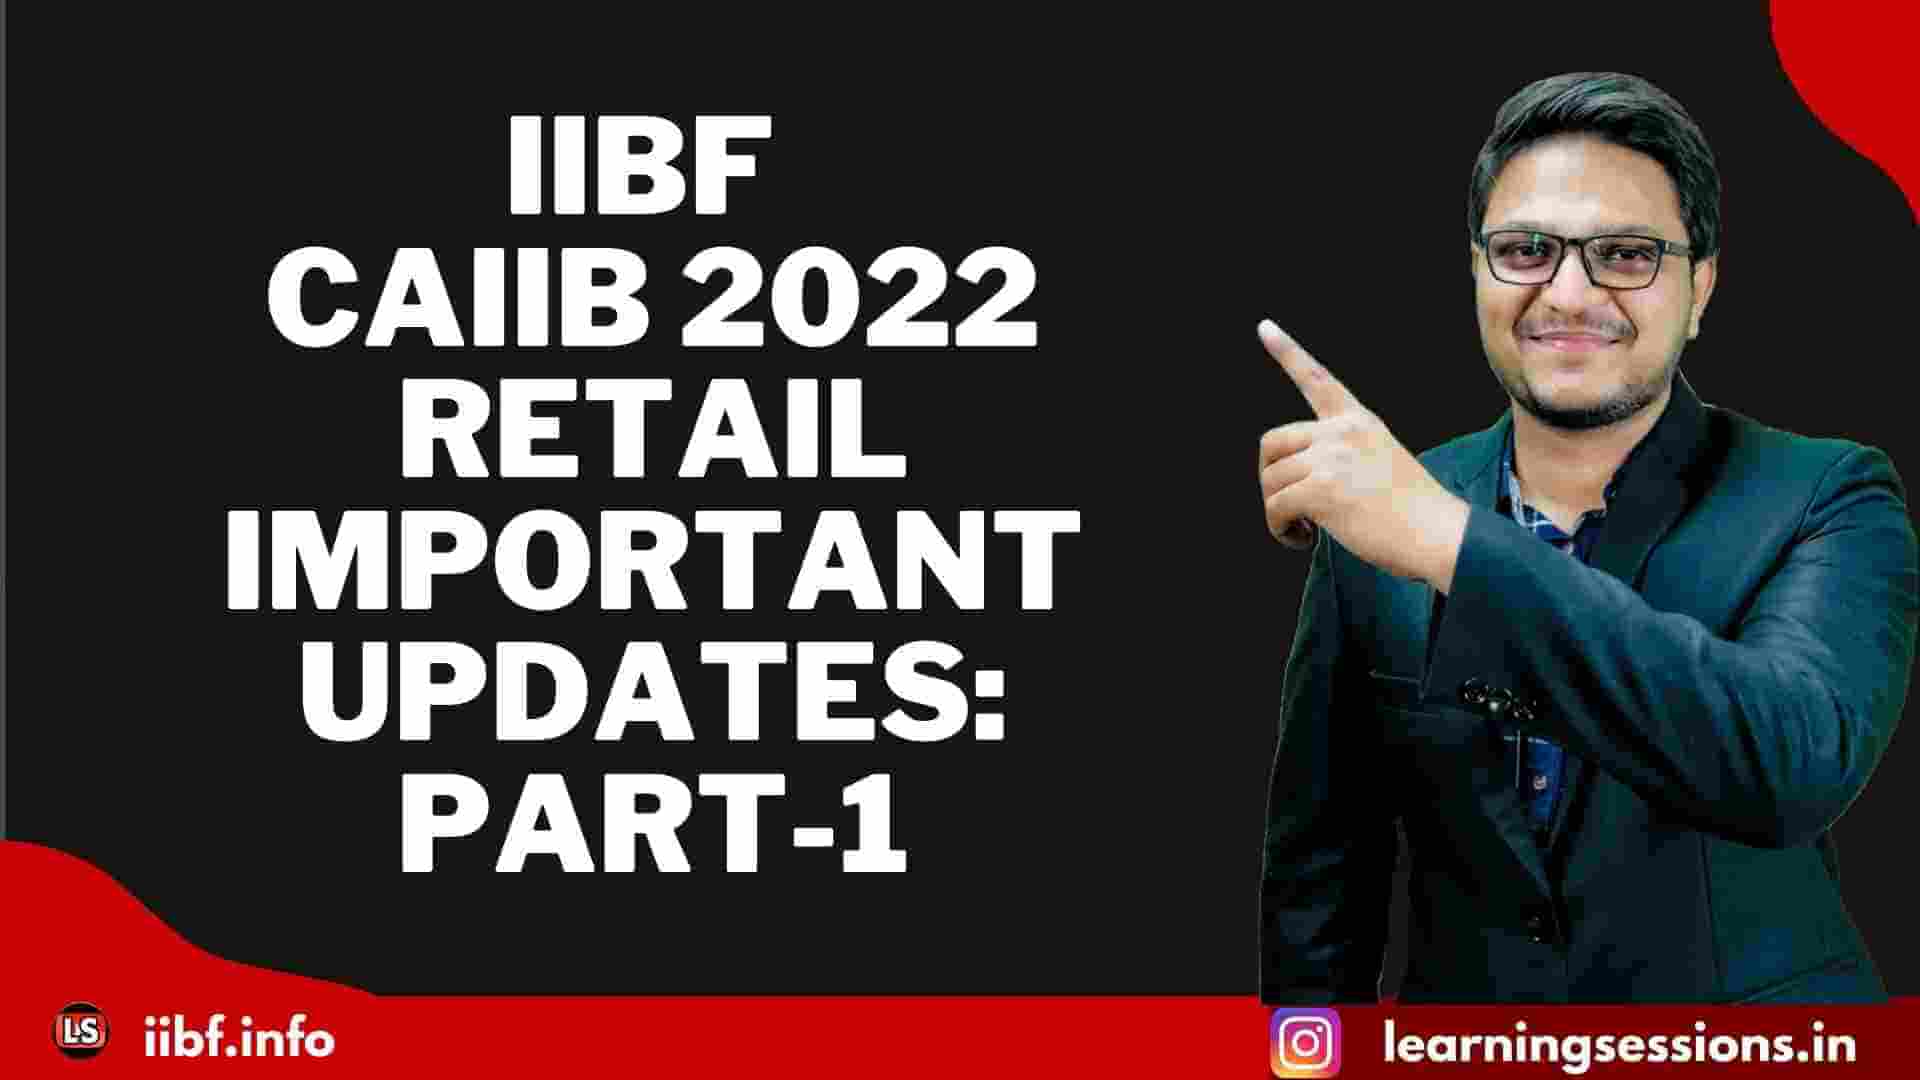 IIBF CAIIB 2022 Retail IMPORTANT UPDATES: PART-1